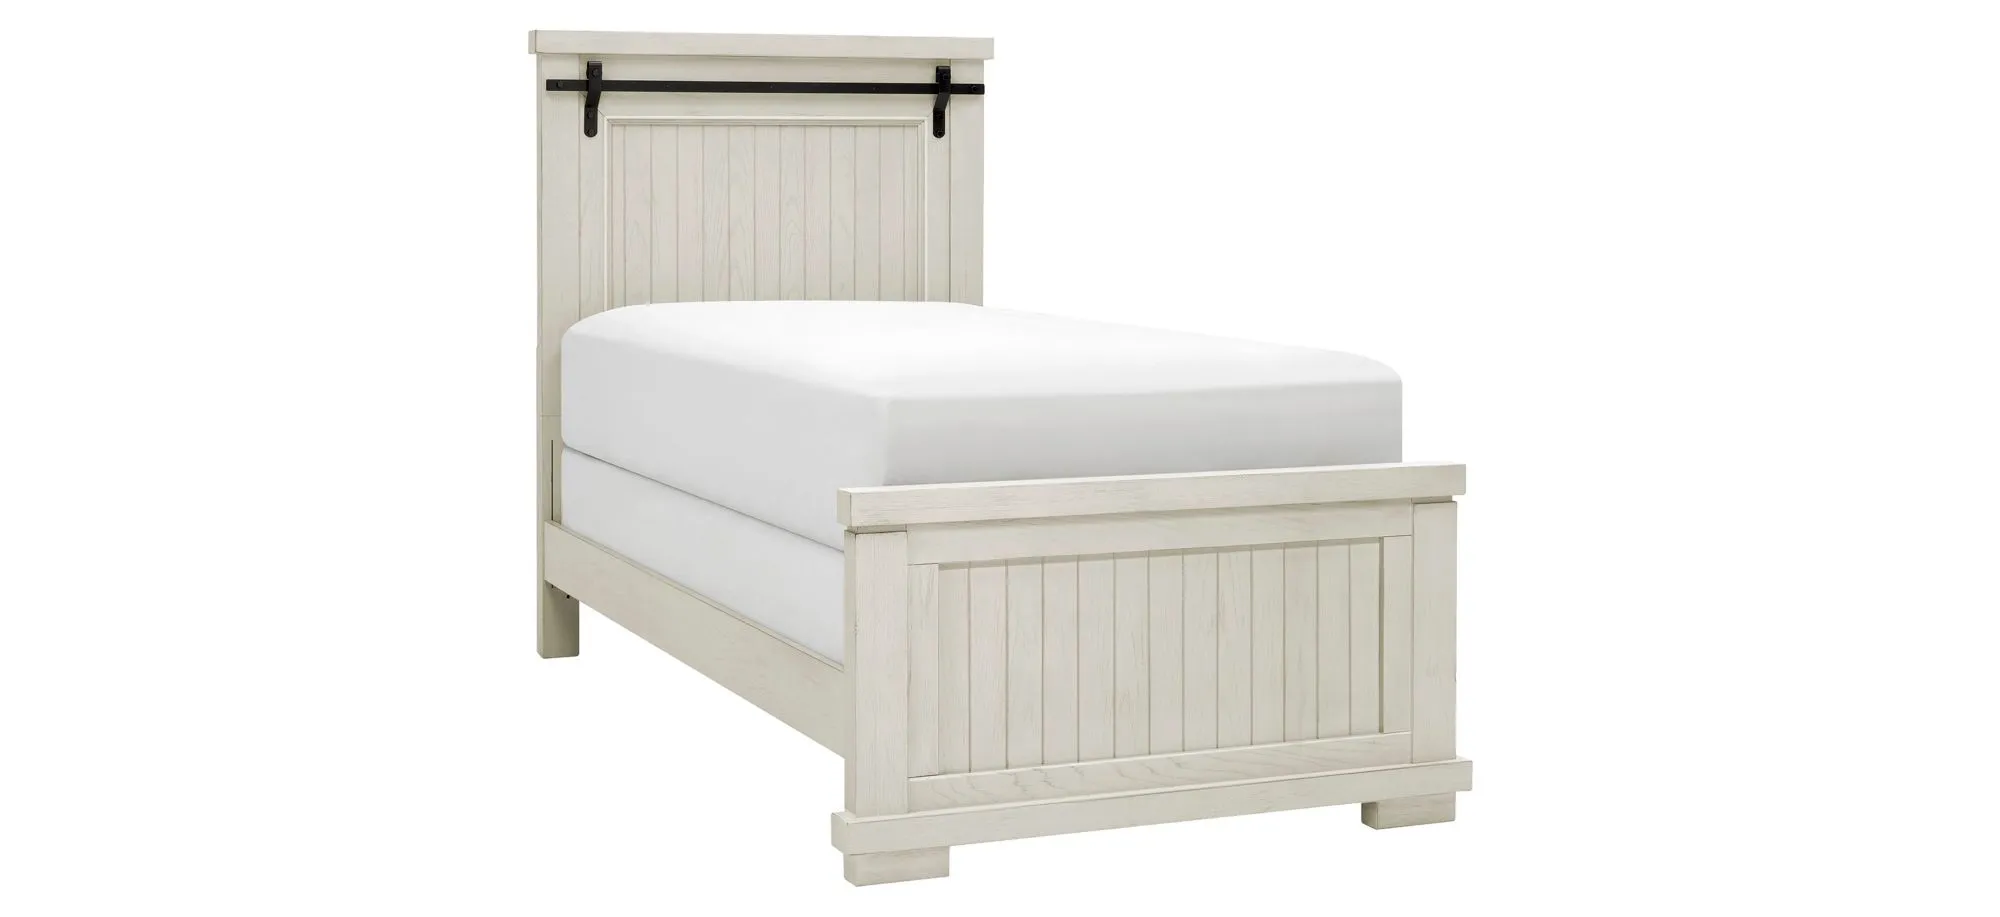 Bexley Panel Bed in White by Davis Intl.